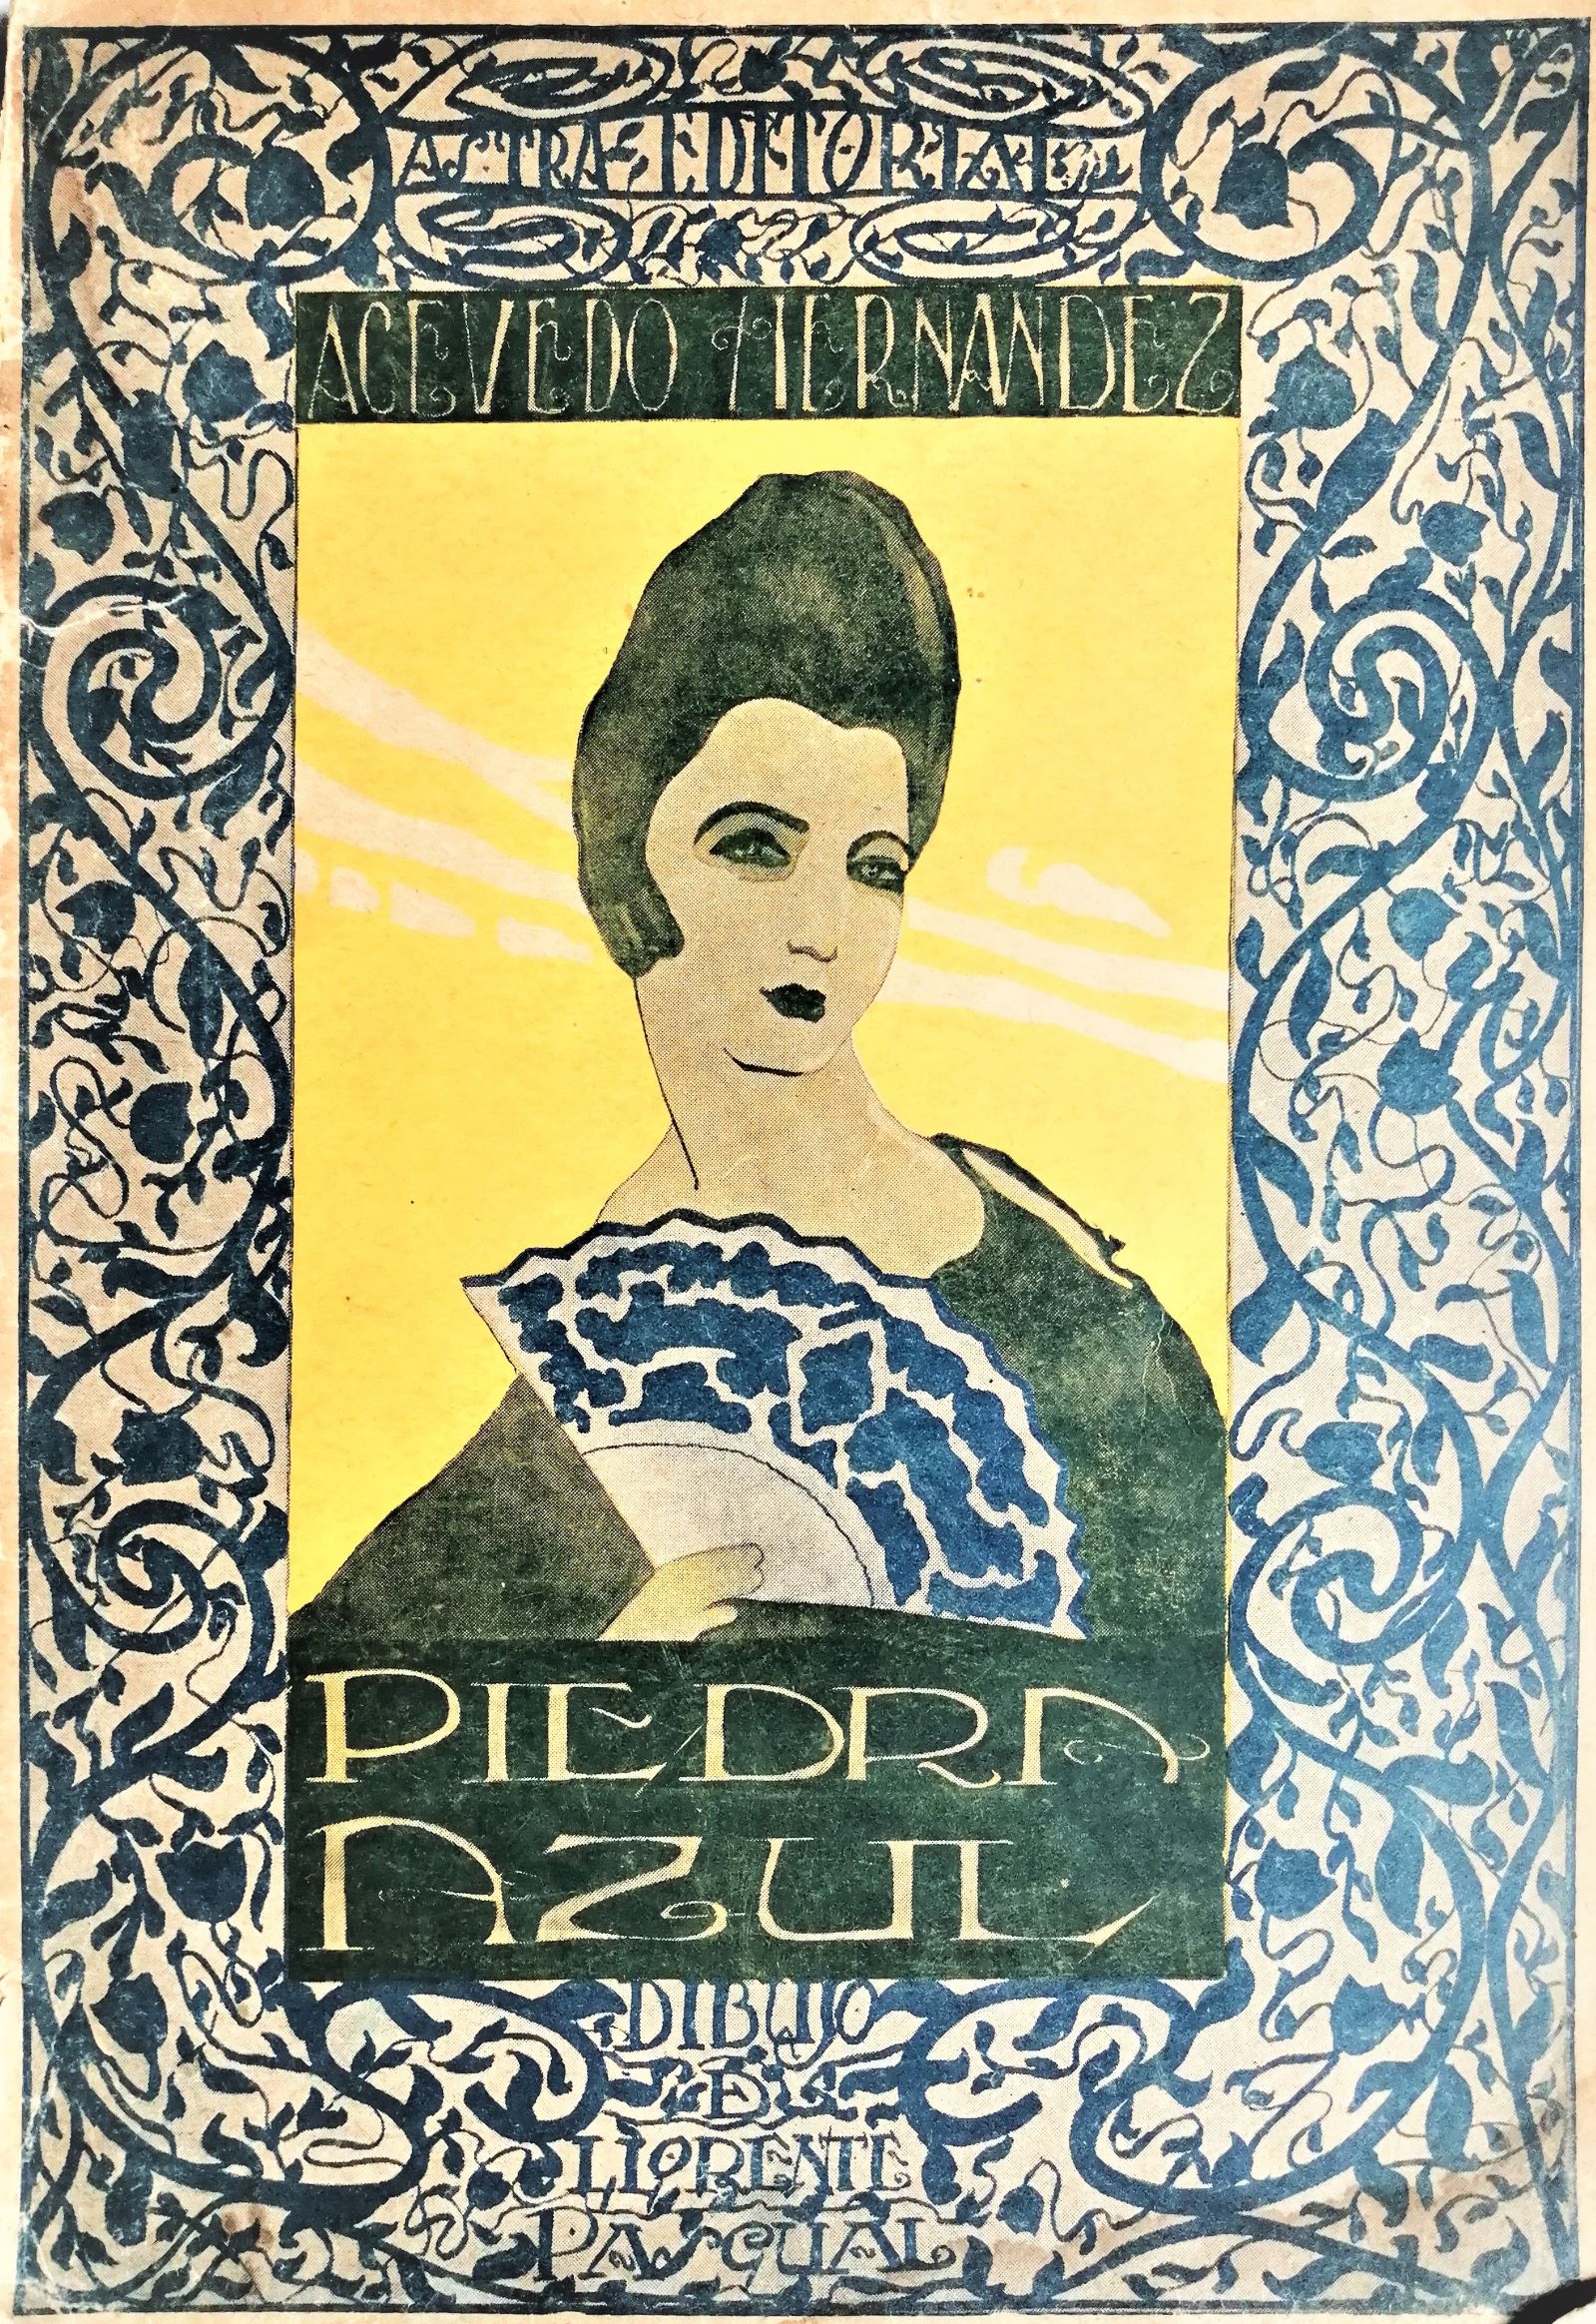 Acevedo Hernández - Piedra Azul